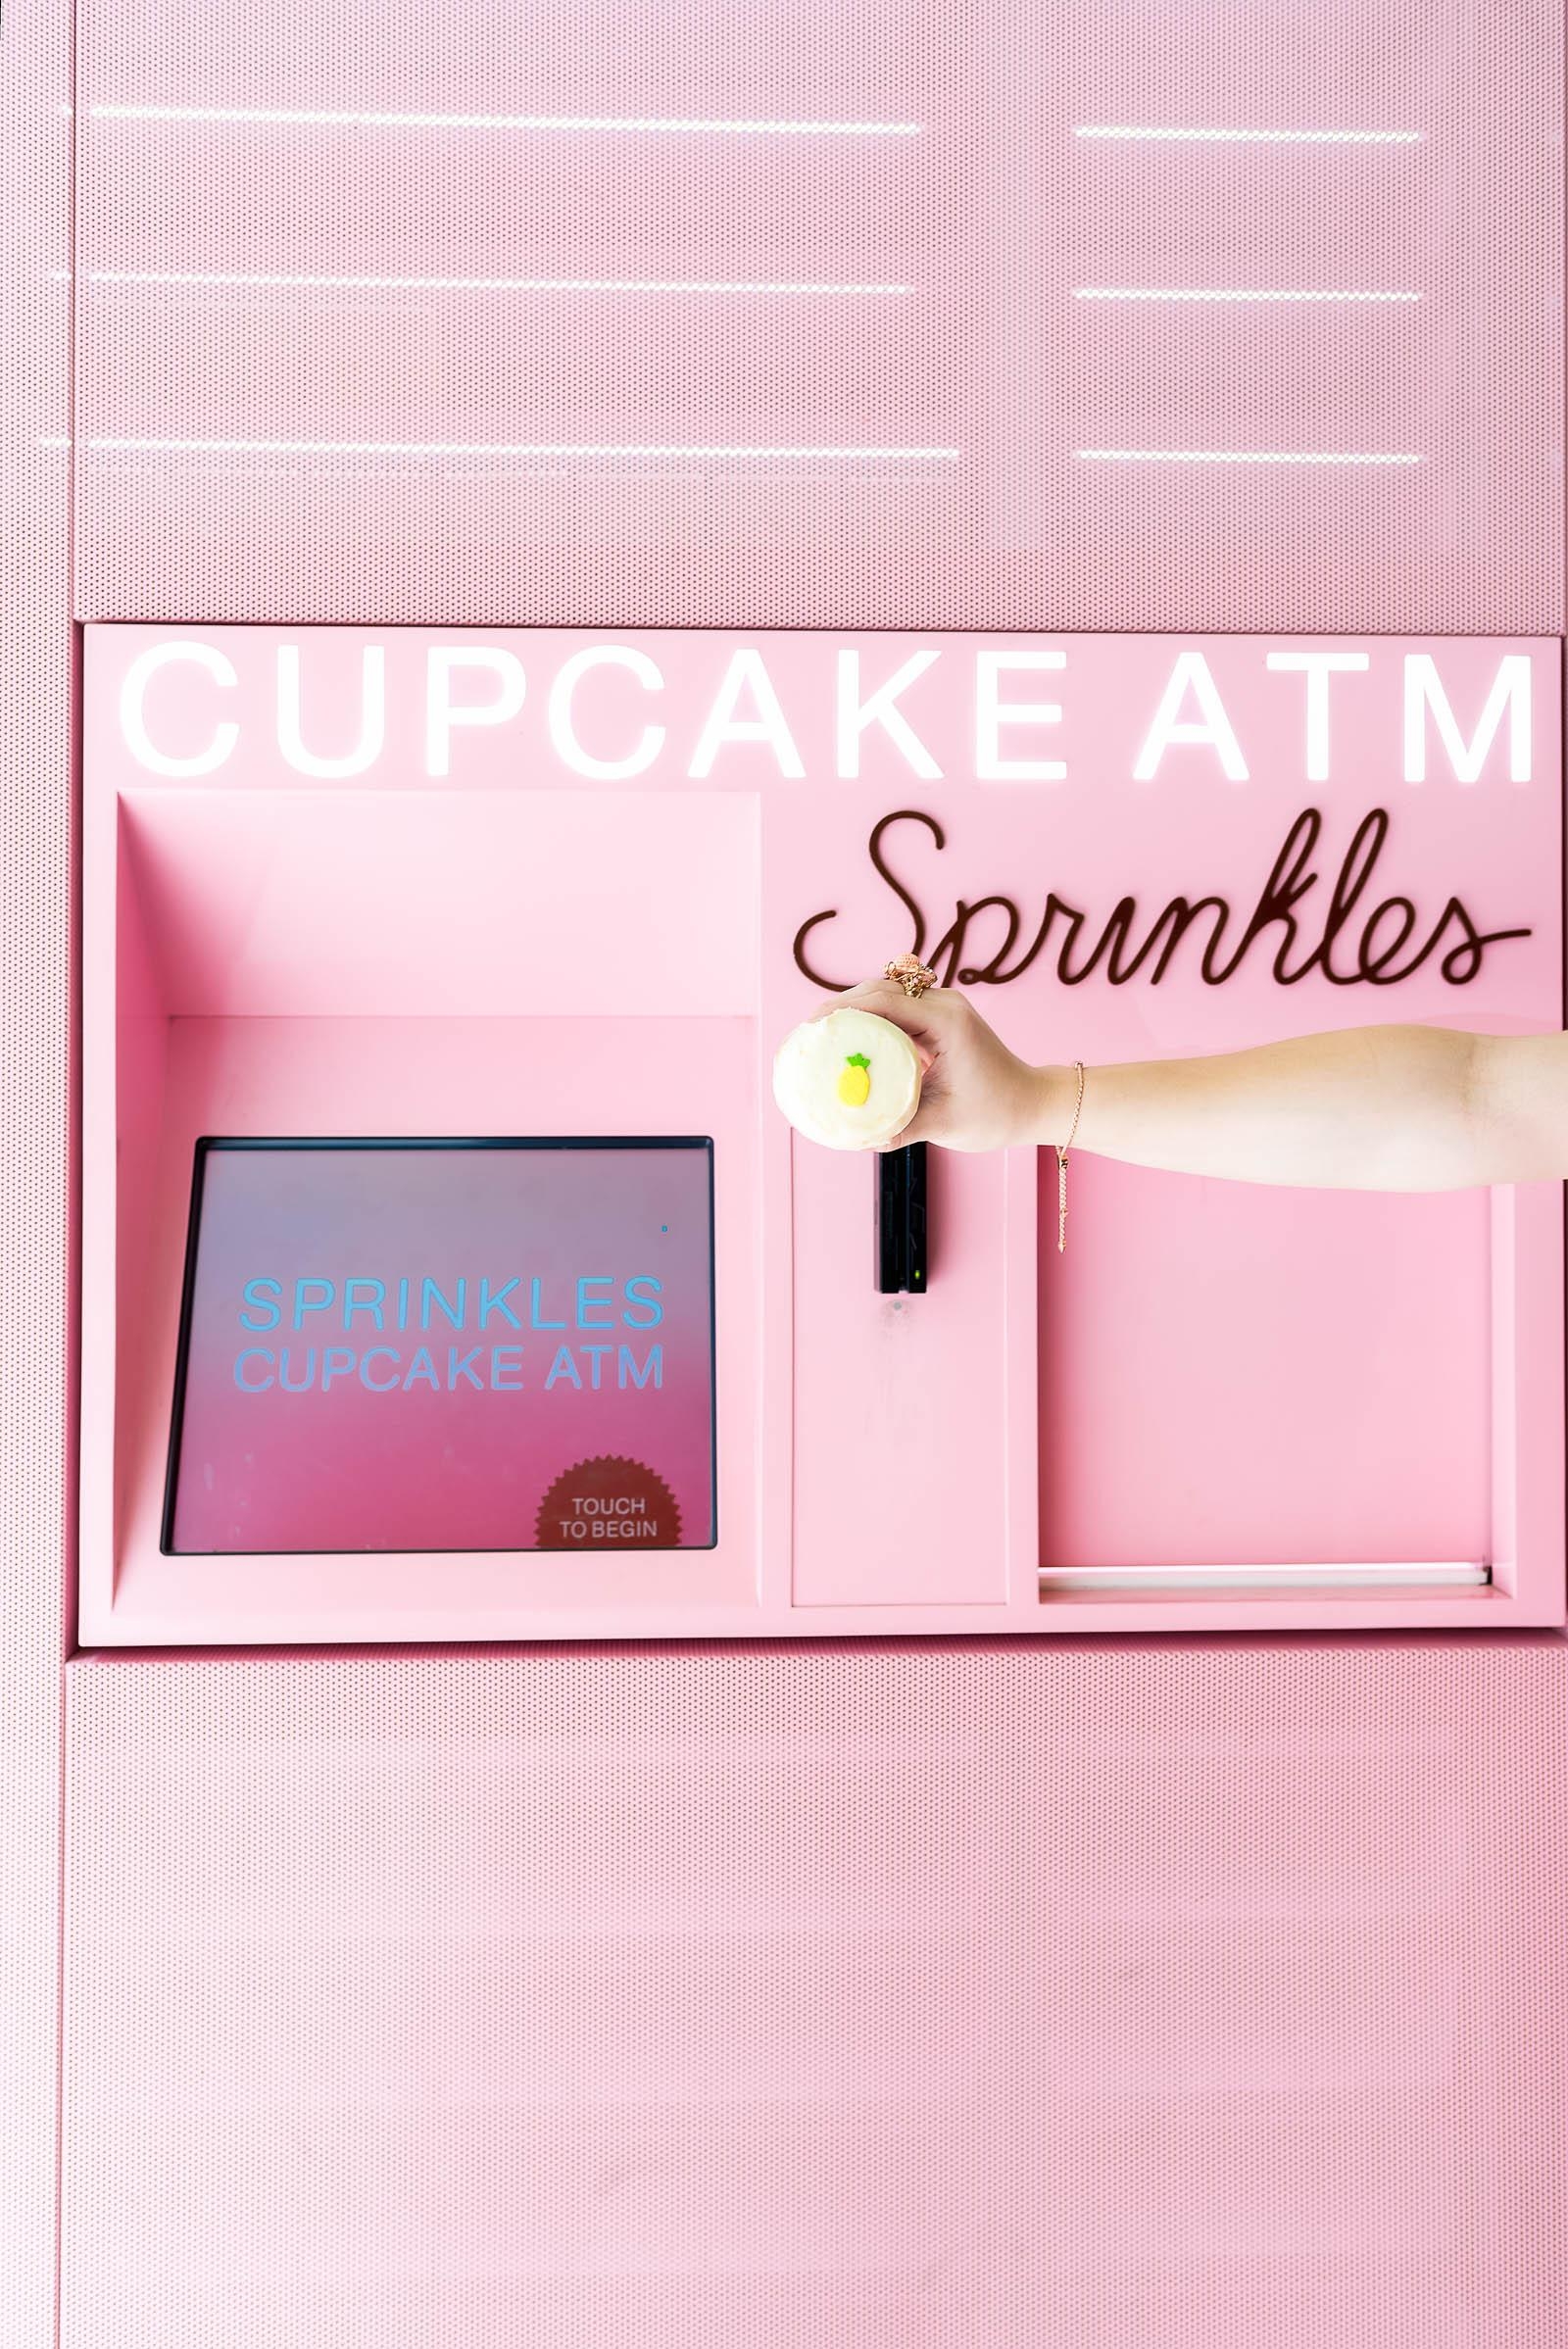 Sprinkles Cupcake ATM Chicago